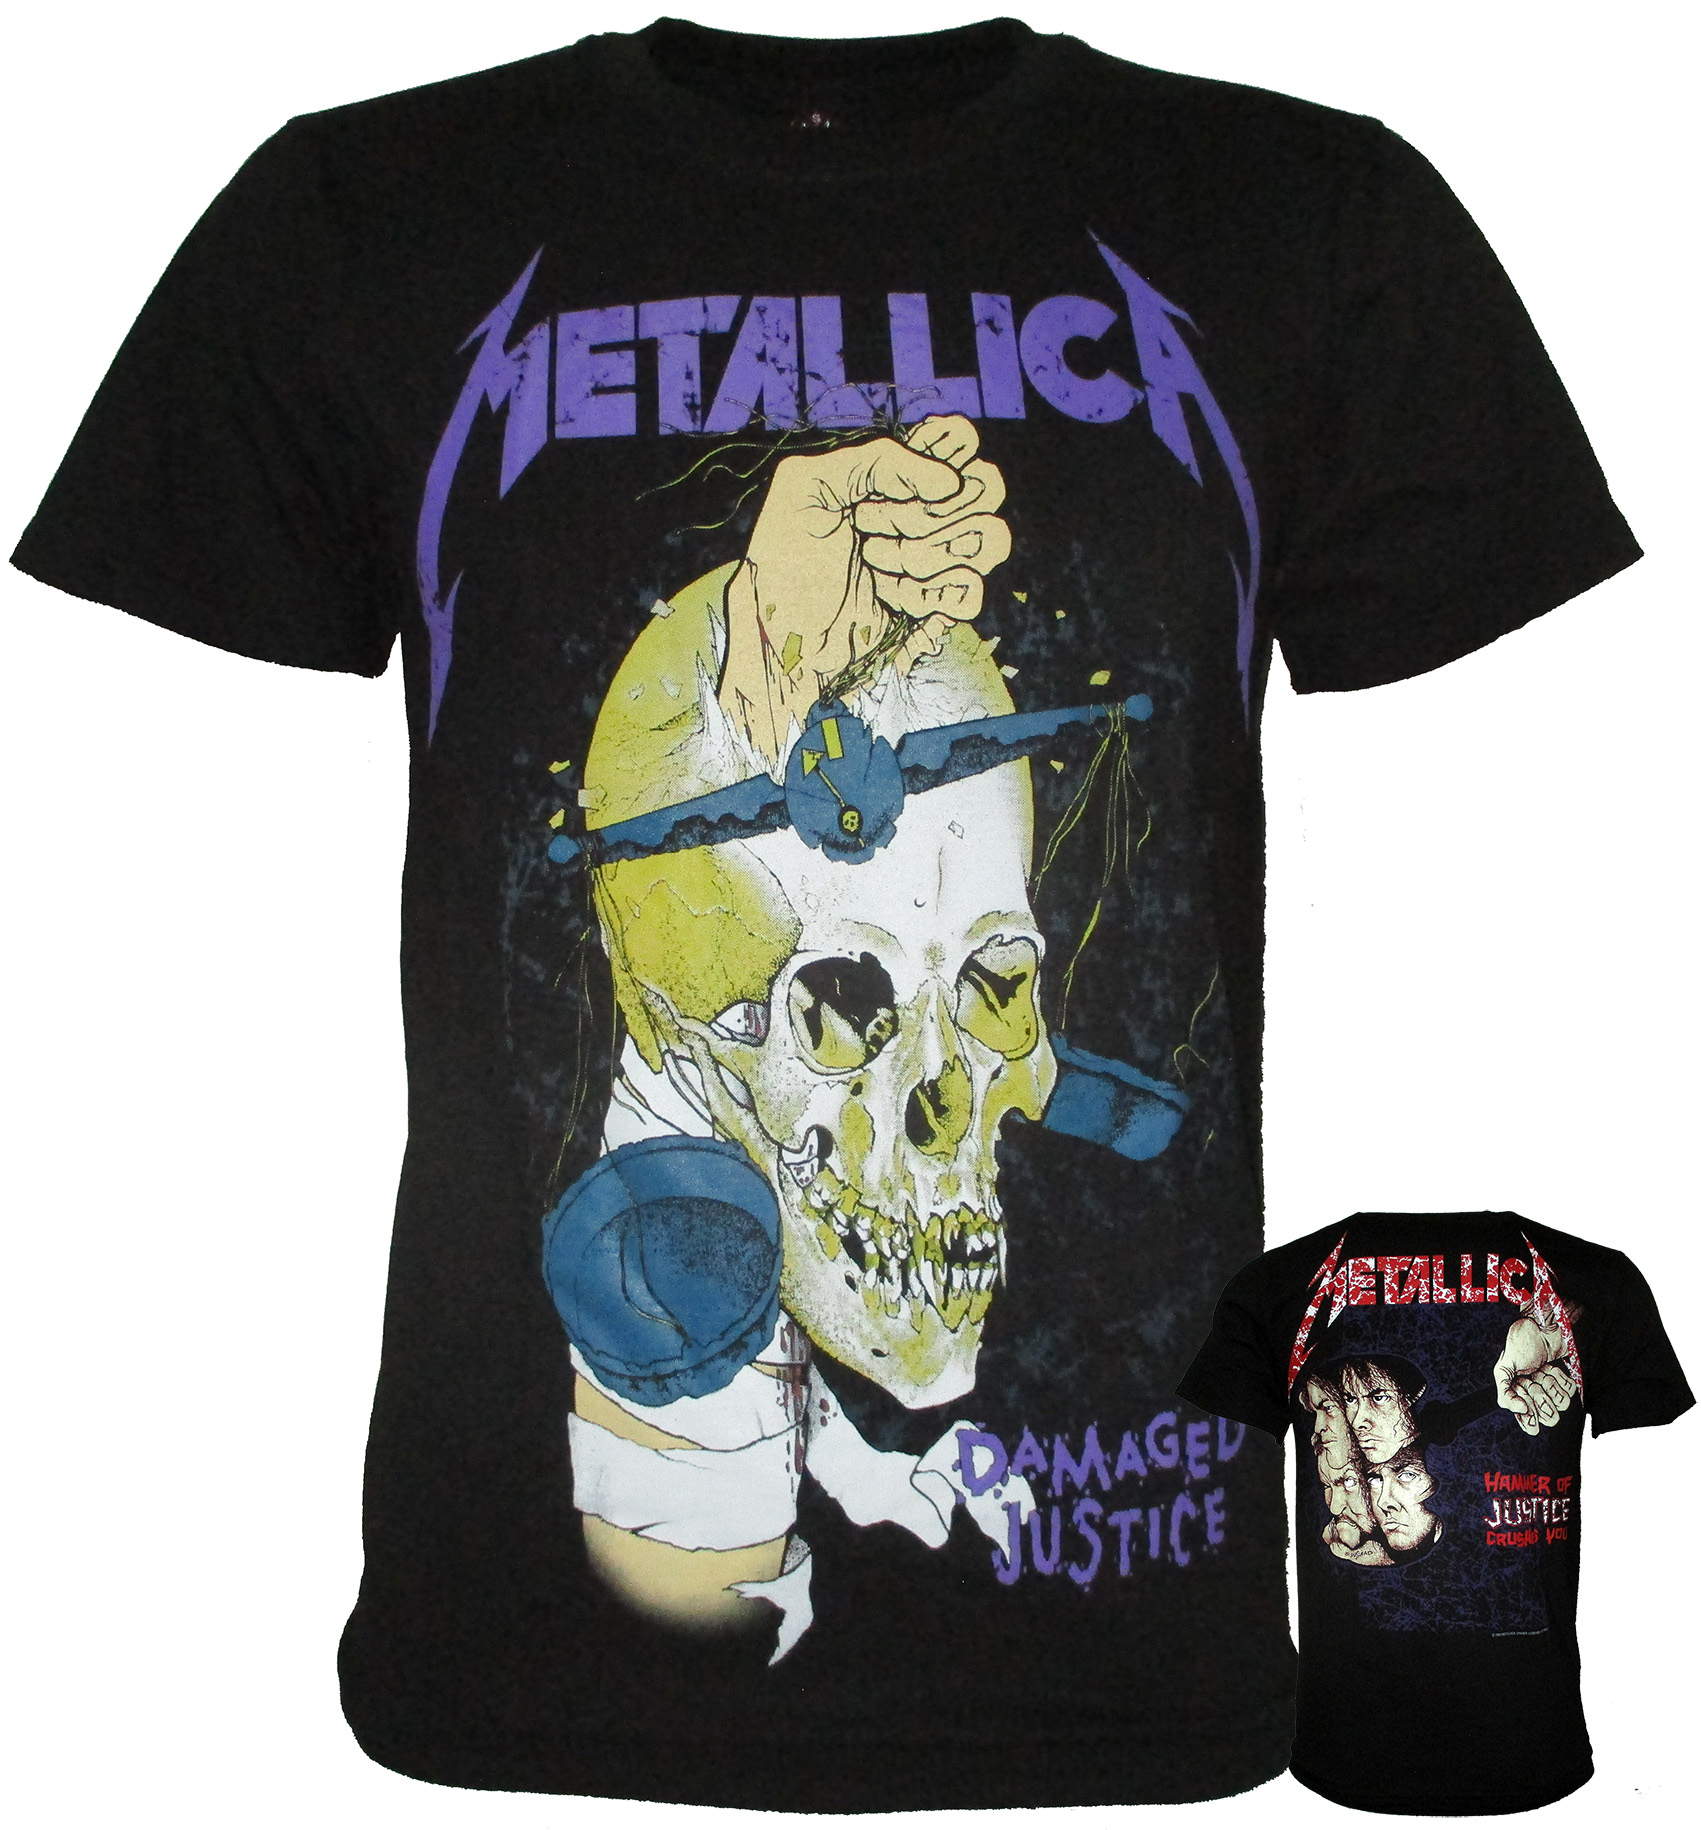 Metallica – Damage justice - MetalDisc